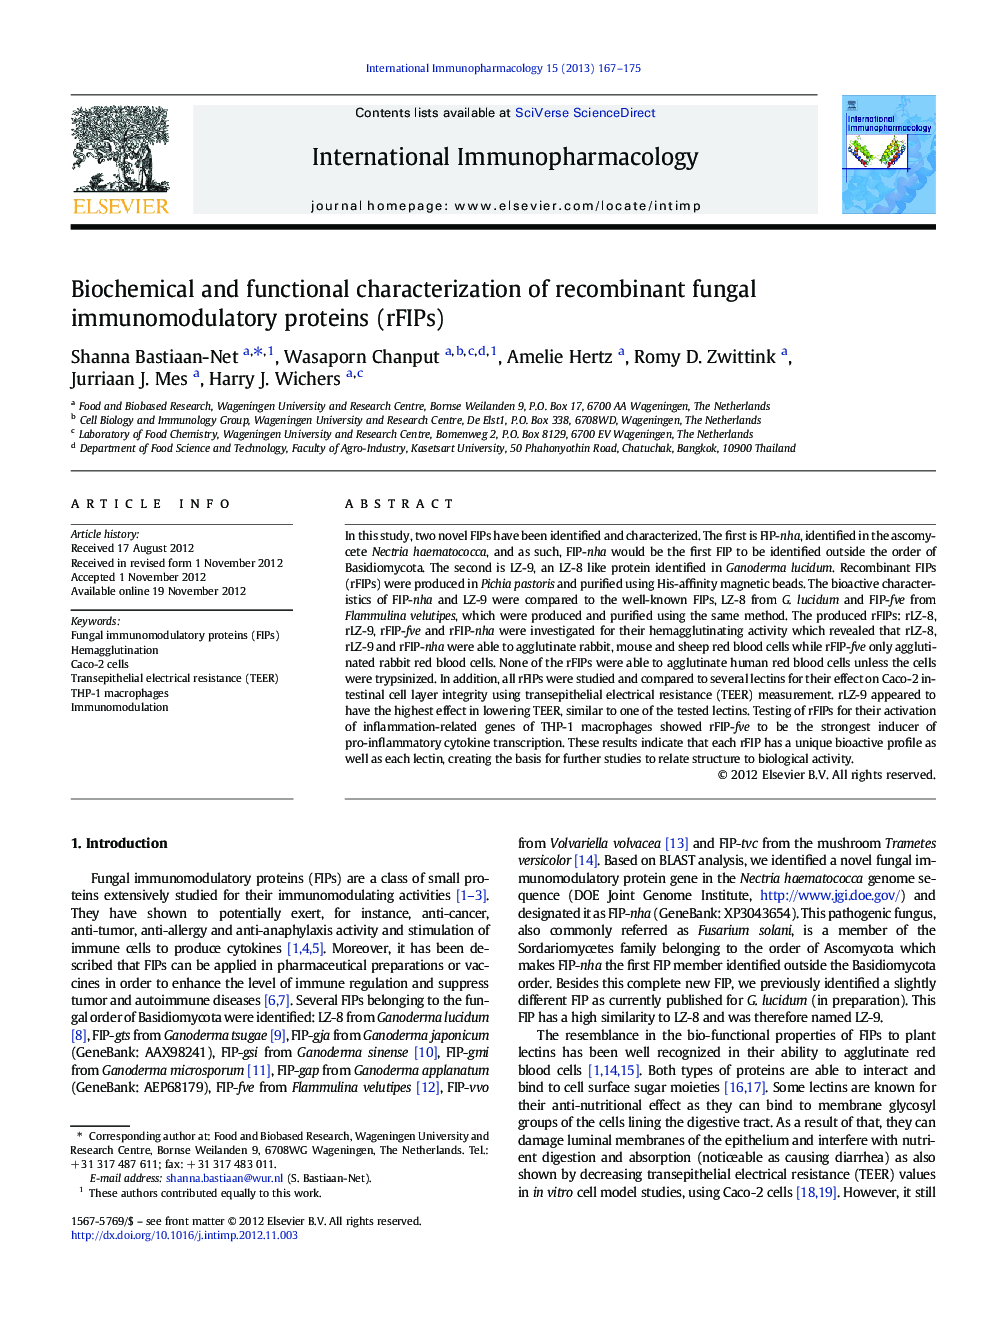 Biochemical and functional characterization of recombinant fungal immunomodulatory proteins (rFIPs)